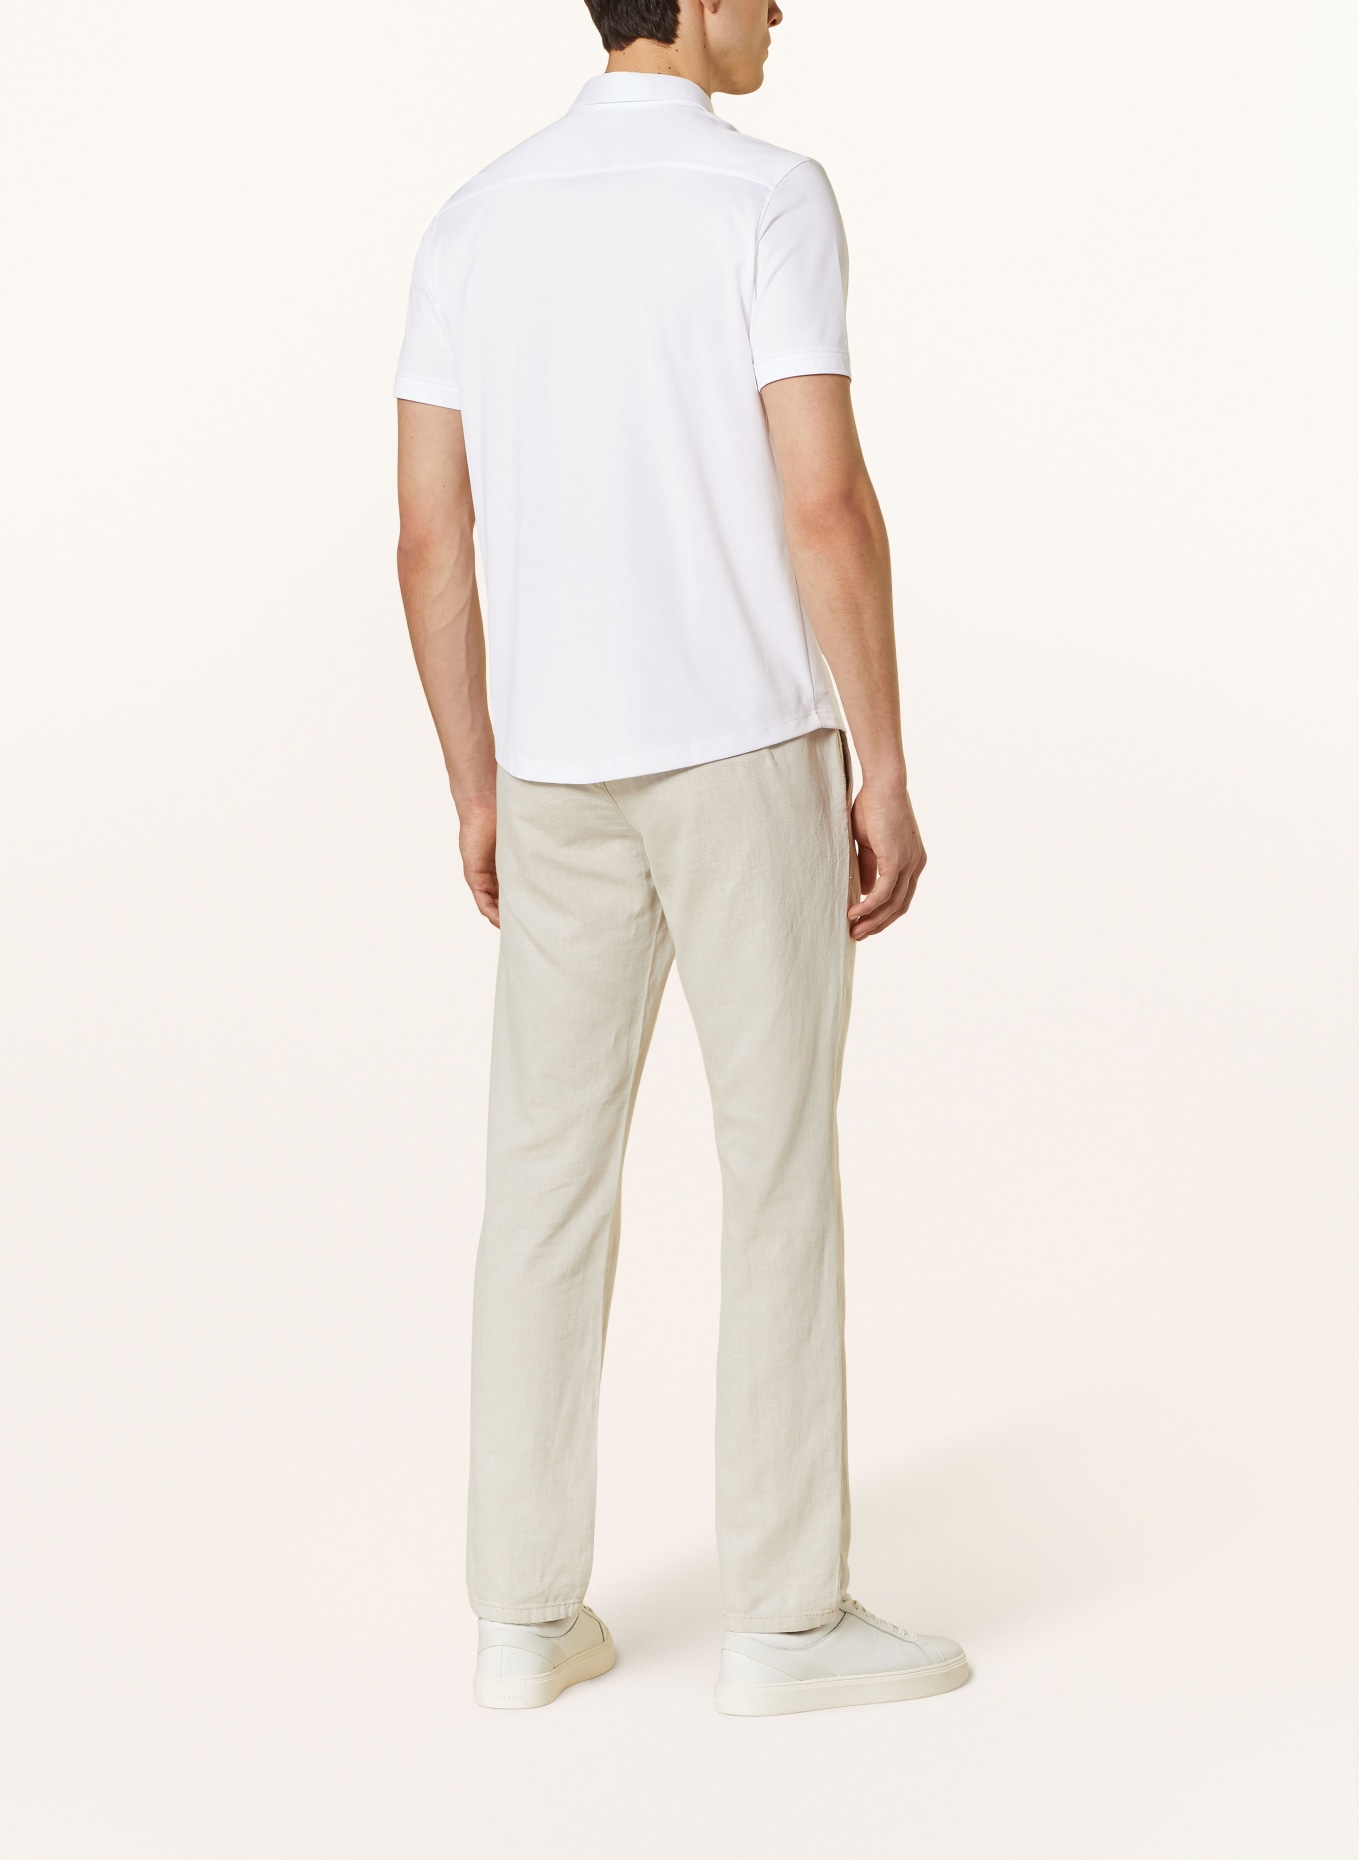 RAGMAN Short sleeve shirt modern fit, Color: WHITE (Image 3)